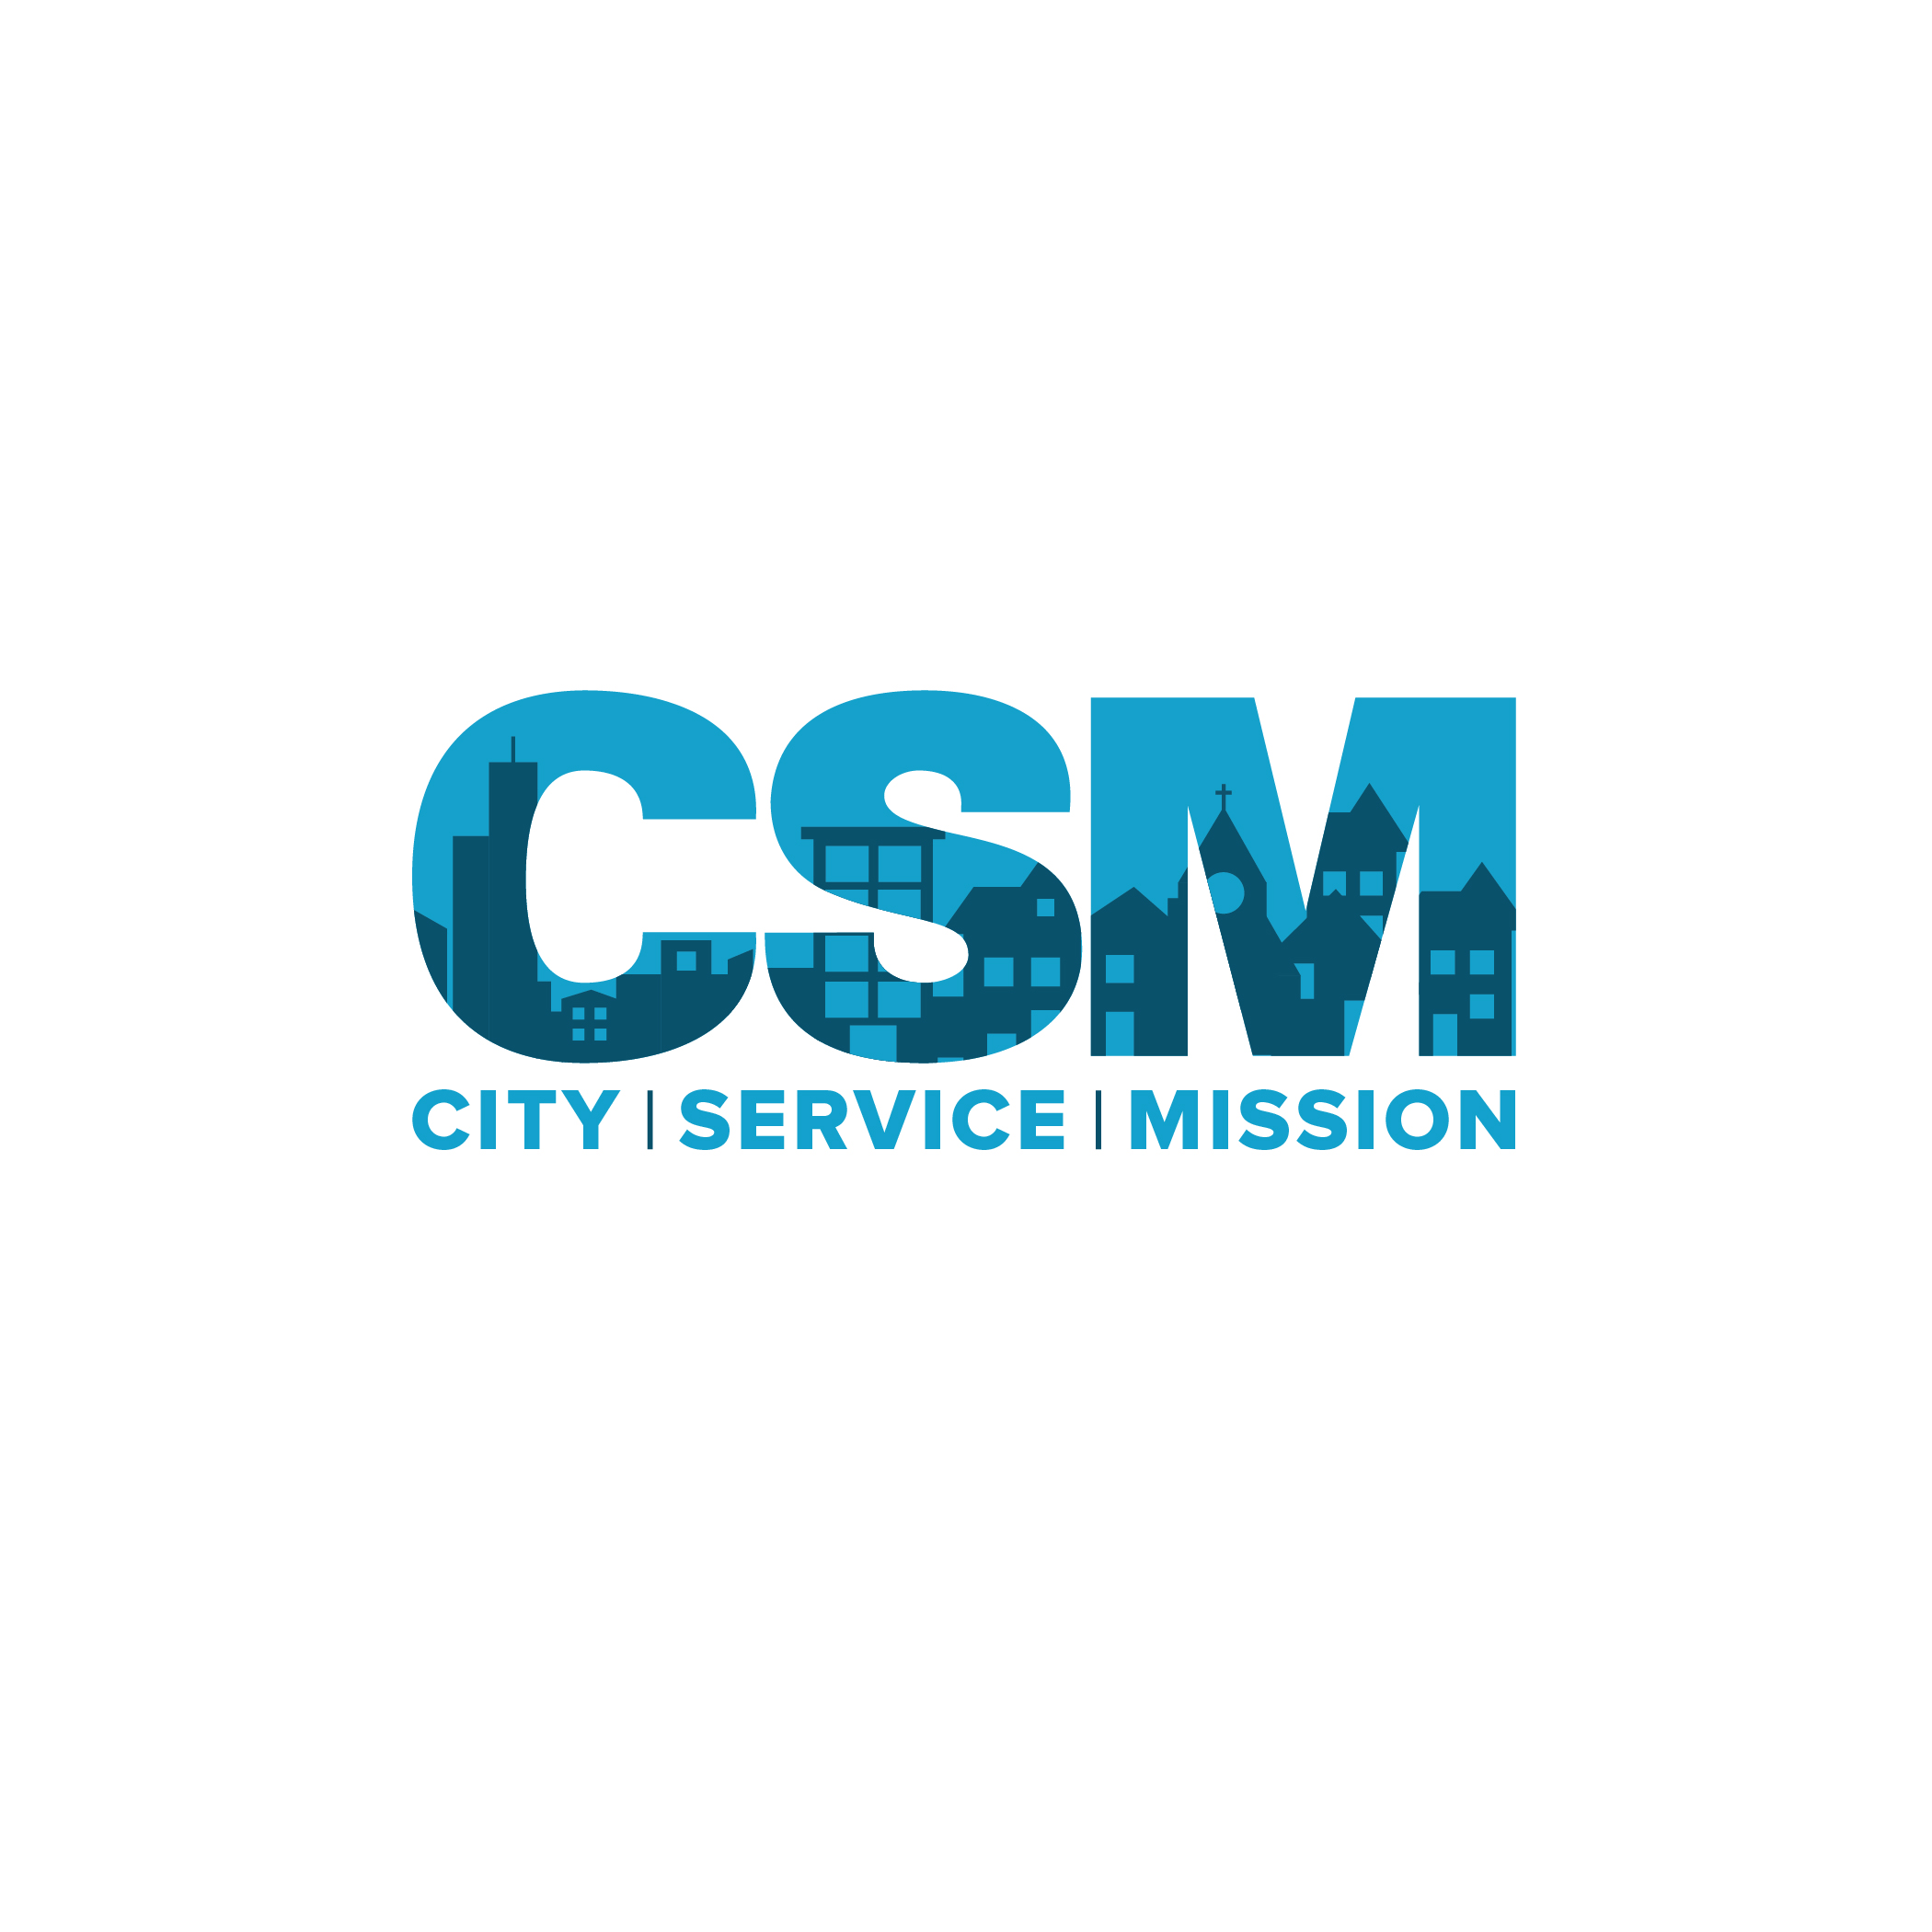 City Service Mission | Urban Missions